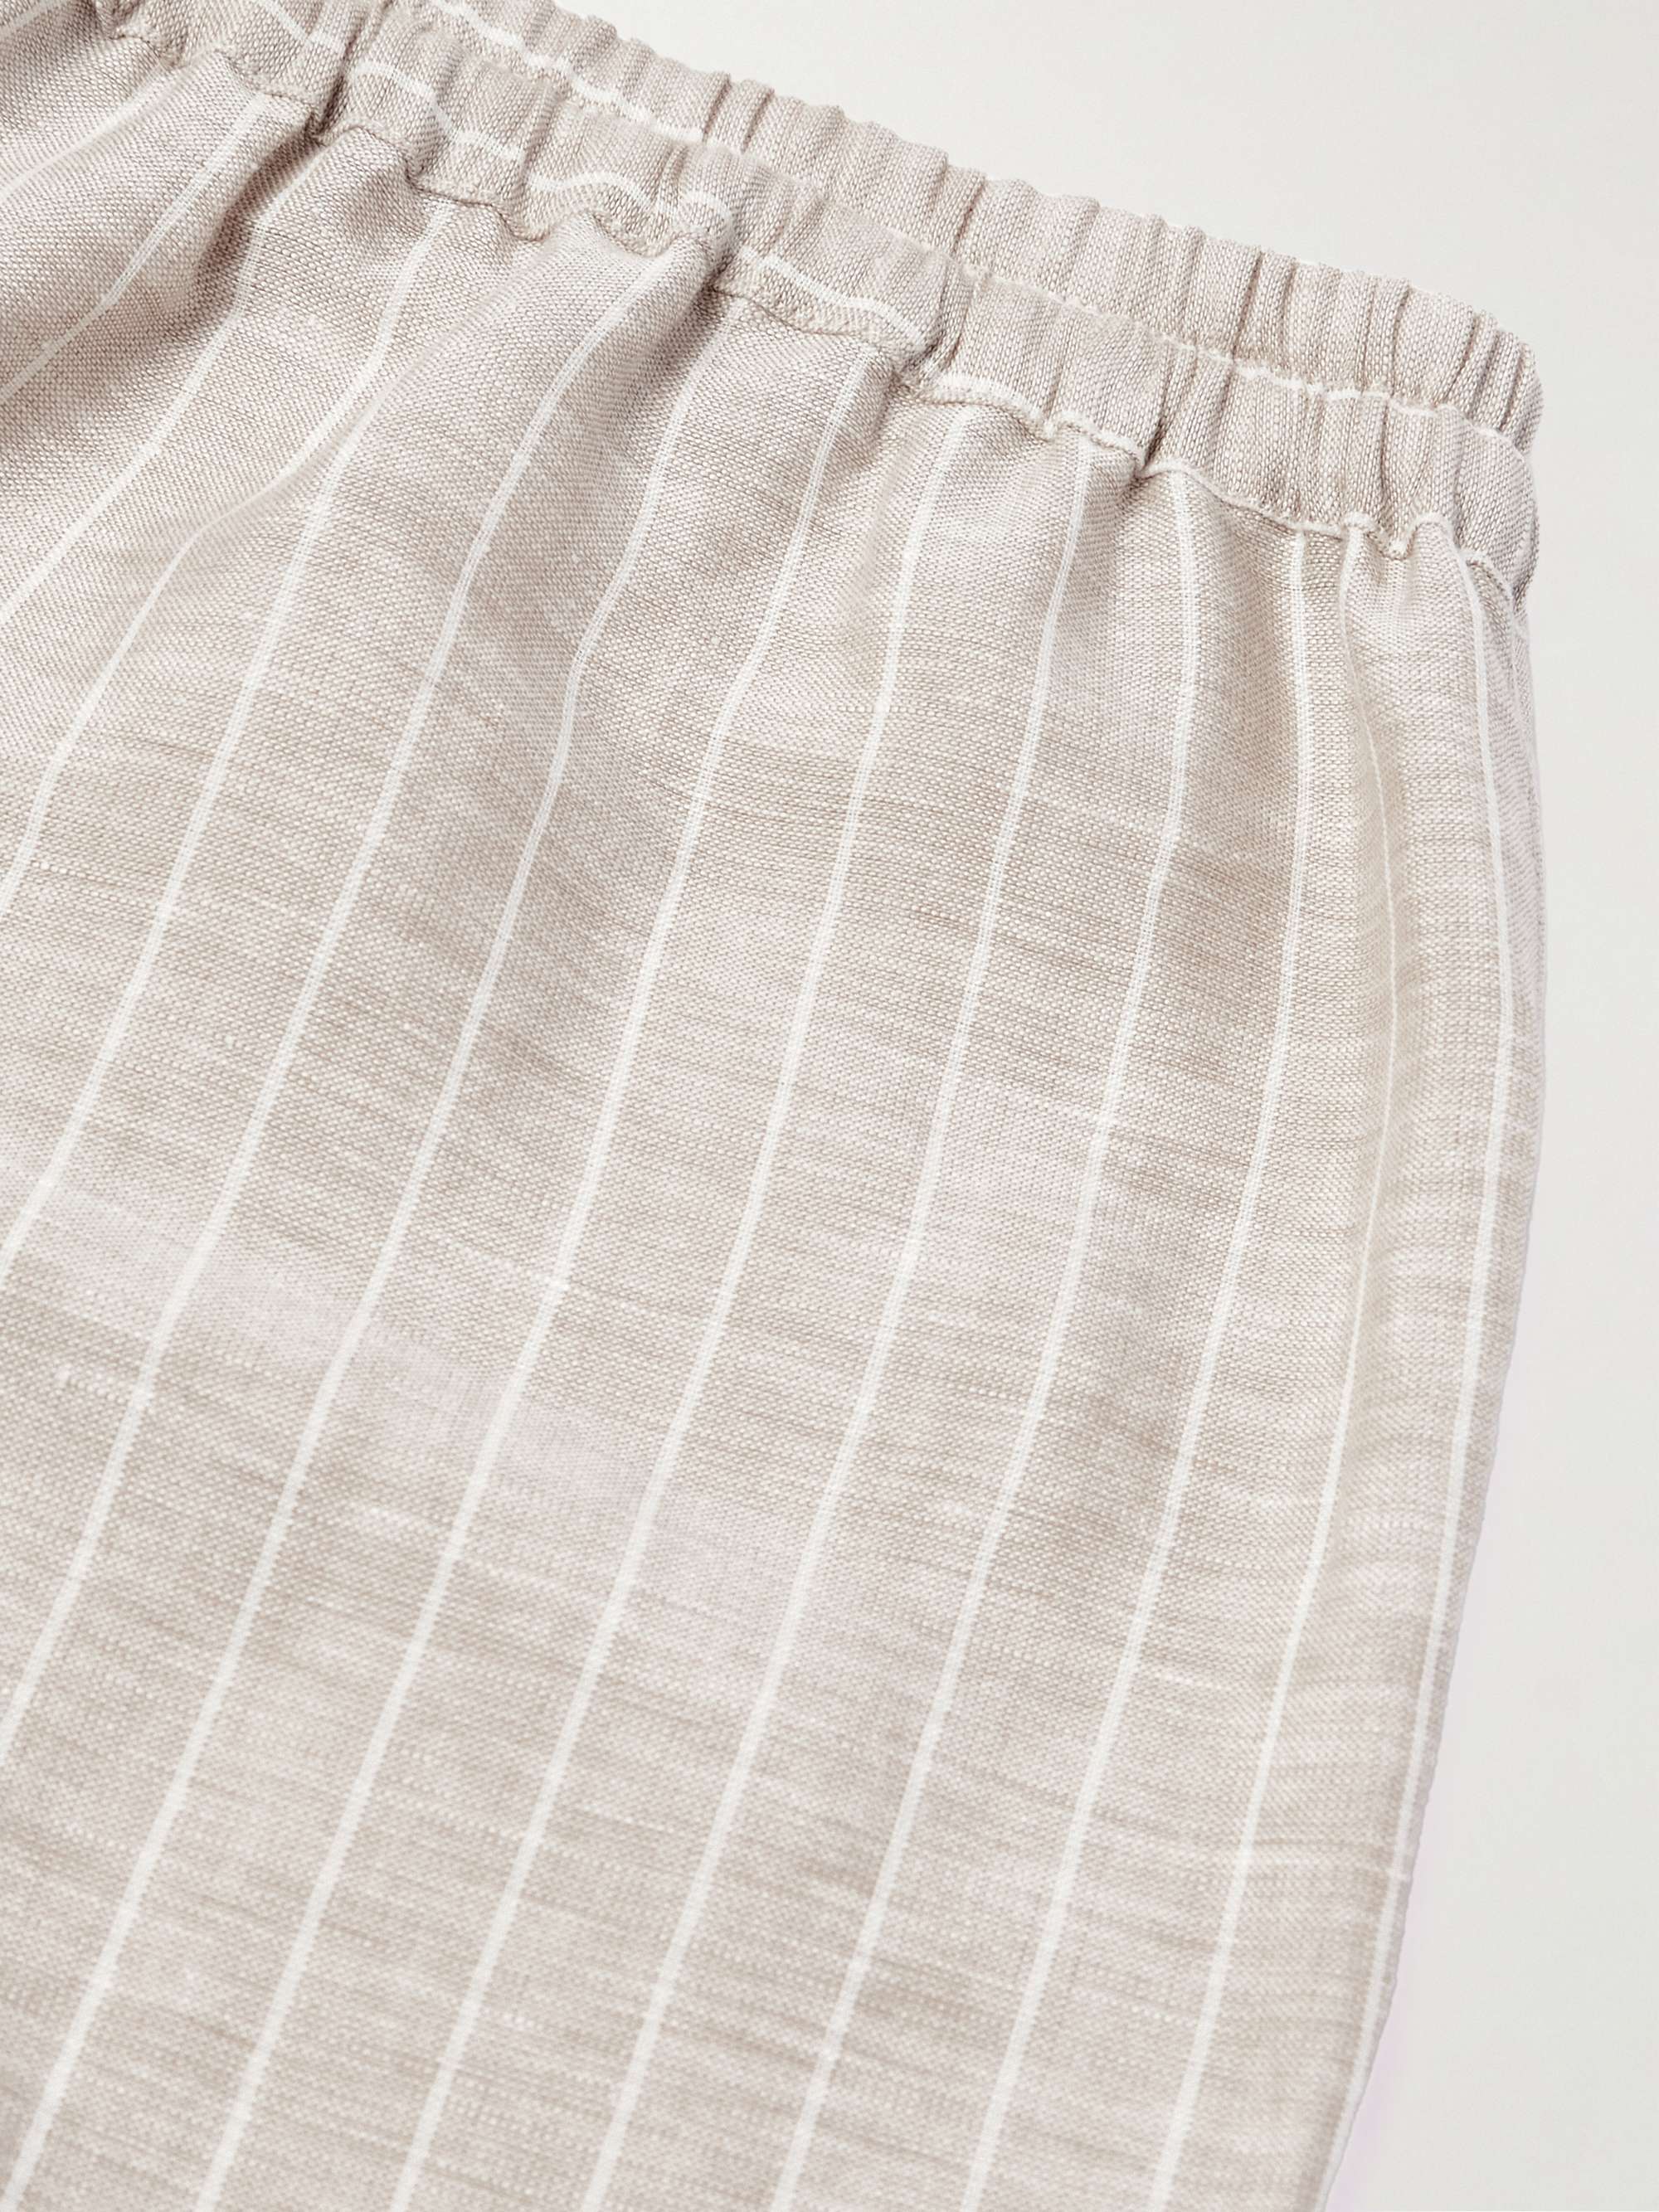 LORETTA CAPONI Straight-Leg Striped Linen and Cotton-Blend Drawstring ...